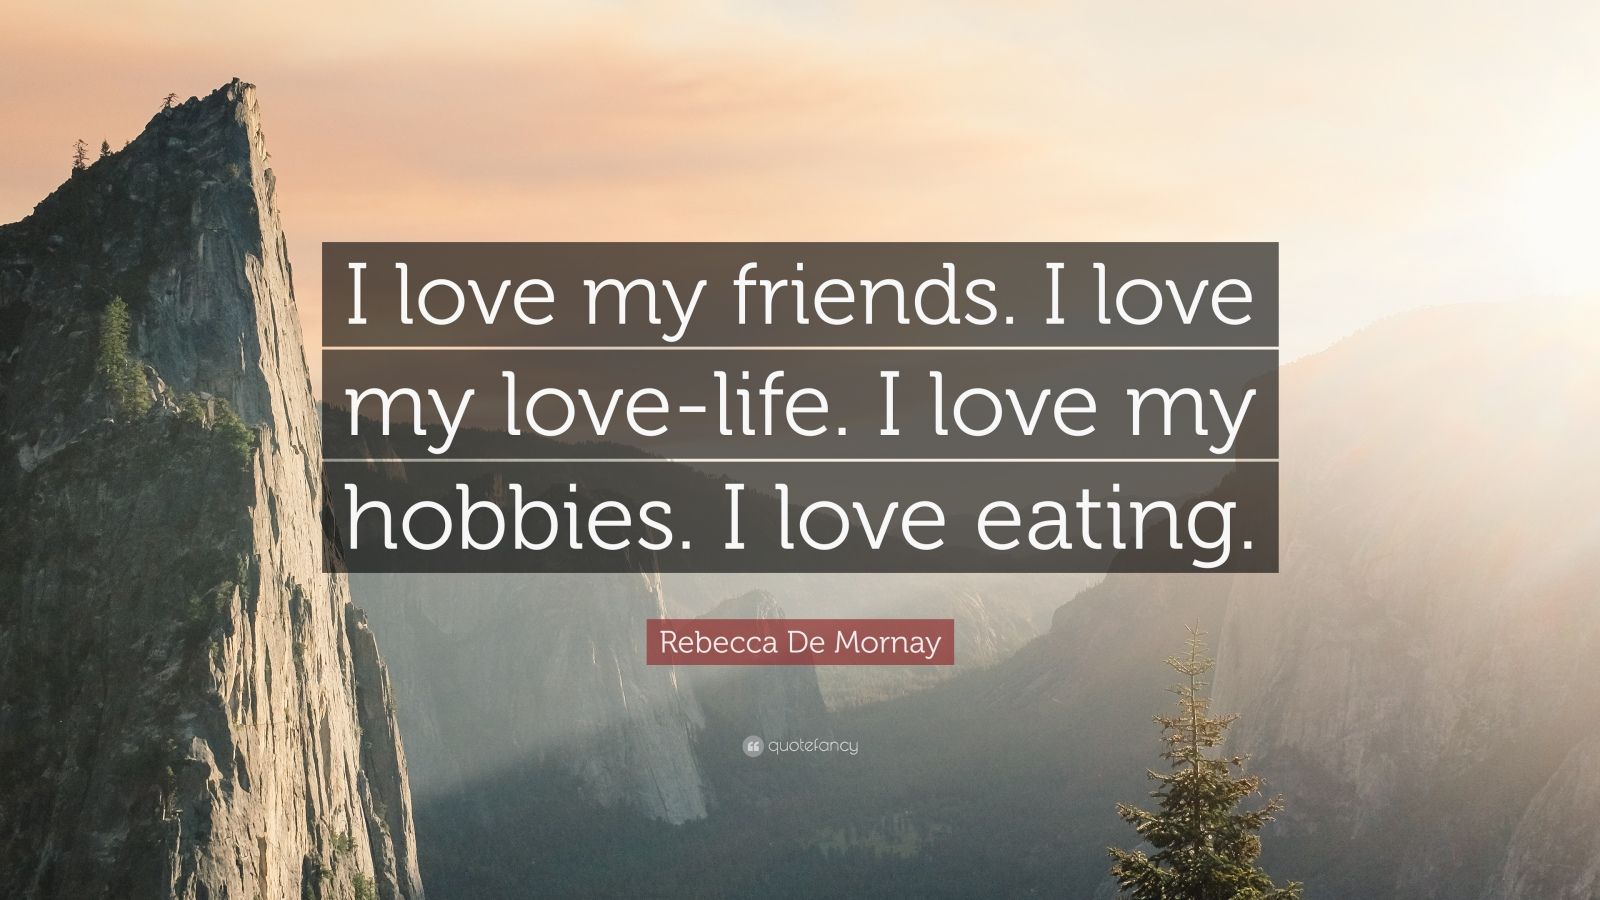 Rebecca De Mornay Quote: “I love my friends. I love my love-life ...